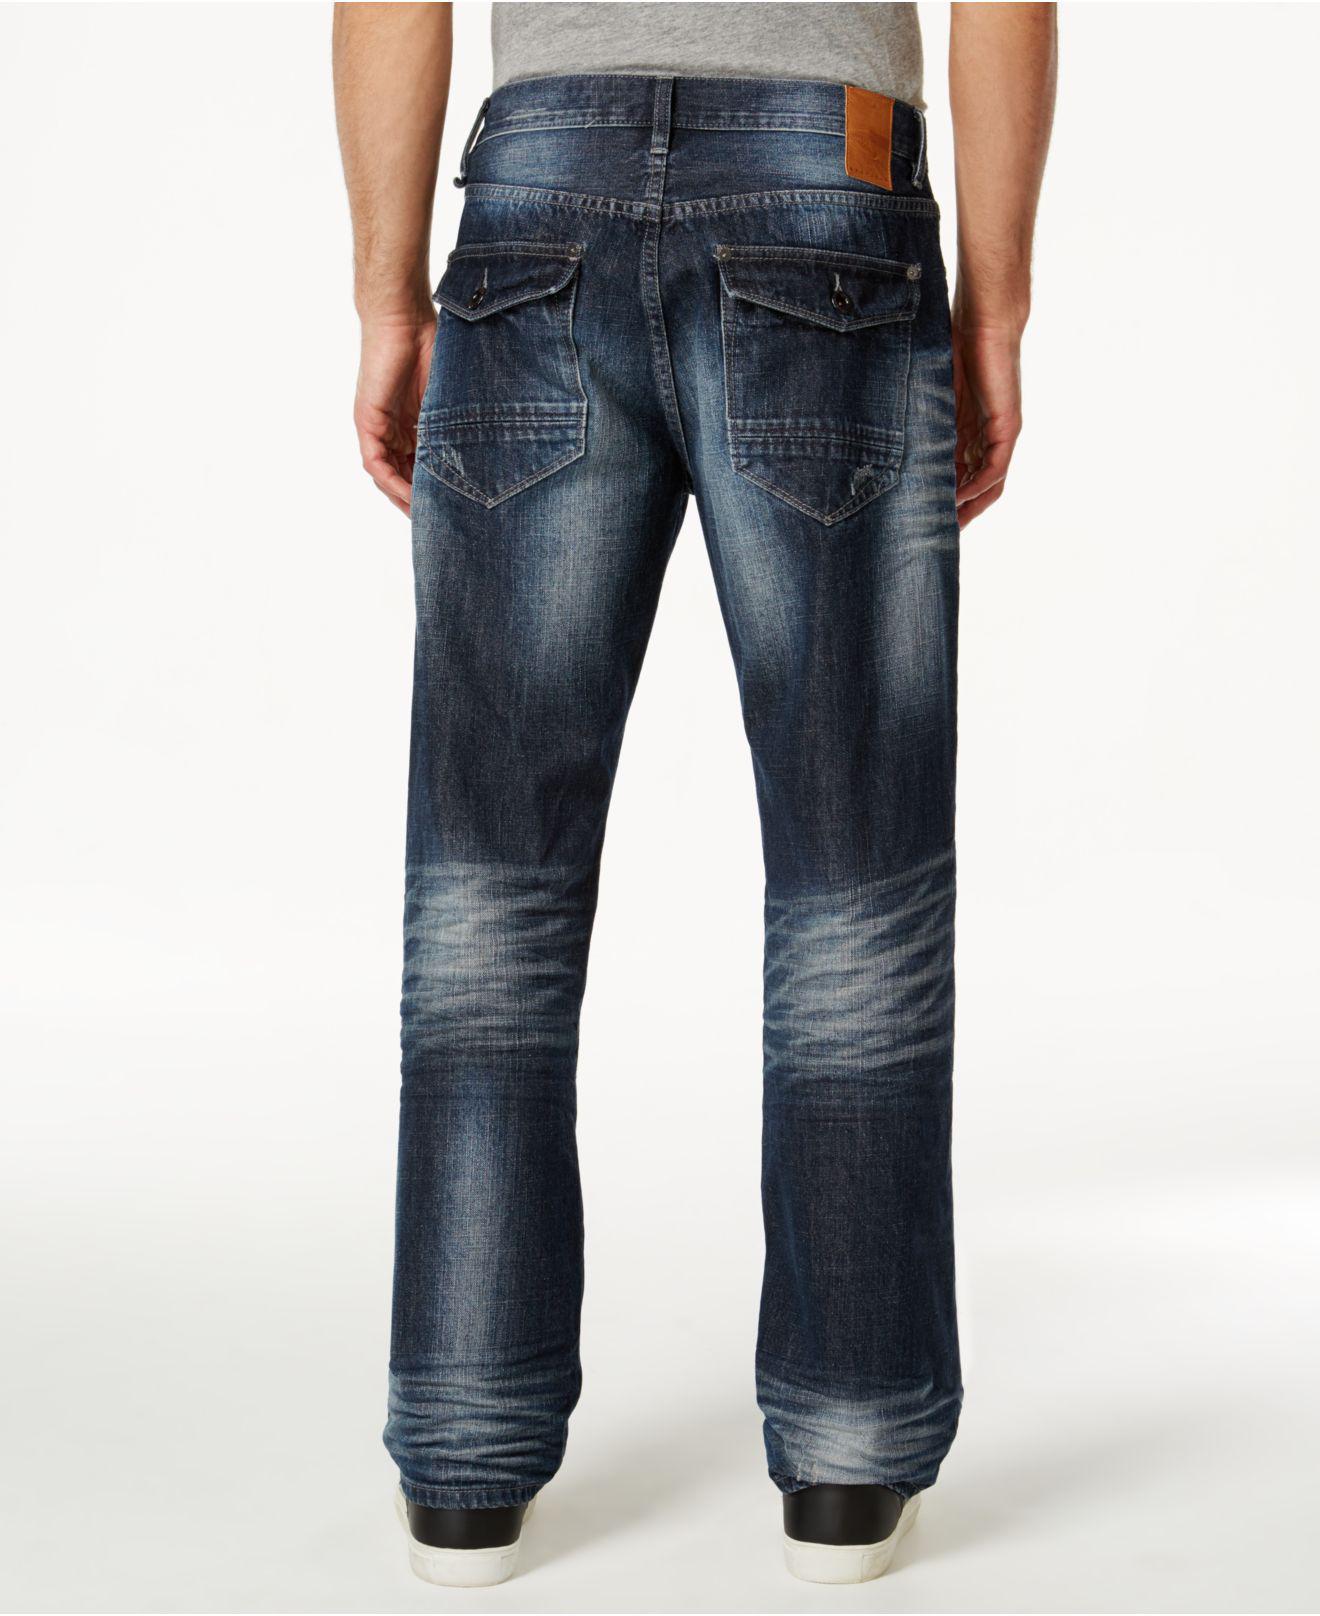 Sean John Men's Jeans - Macy's 0FE